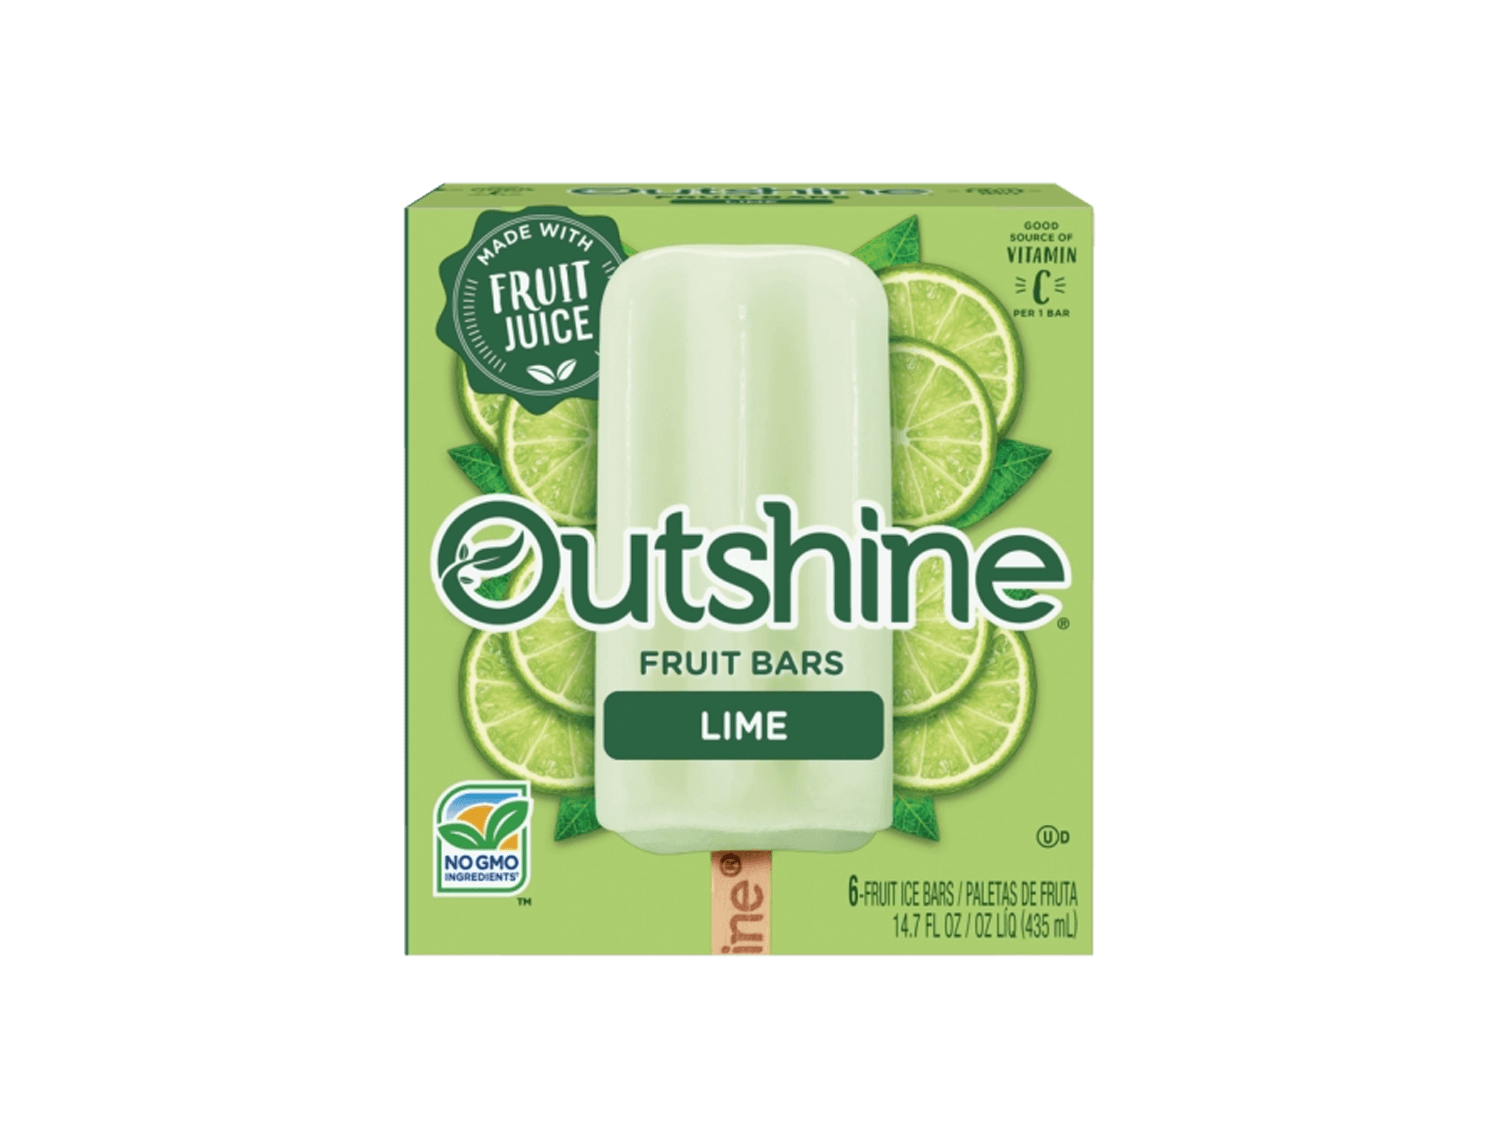 box of Outshine lime fruit bars